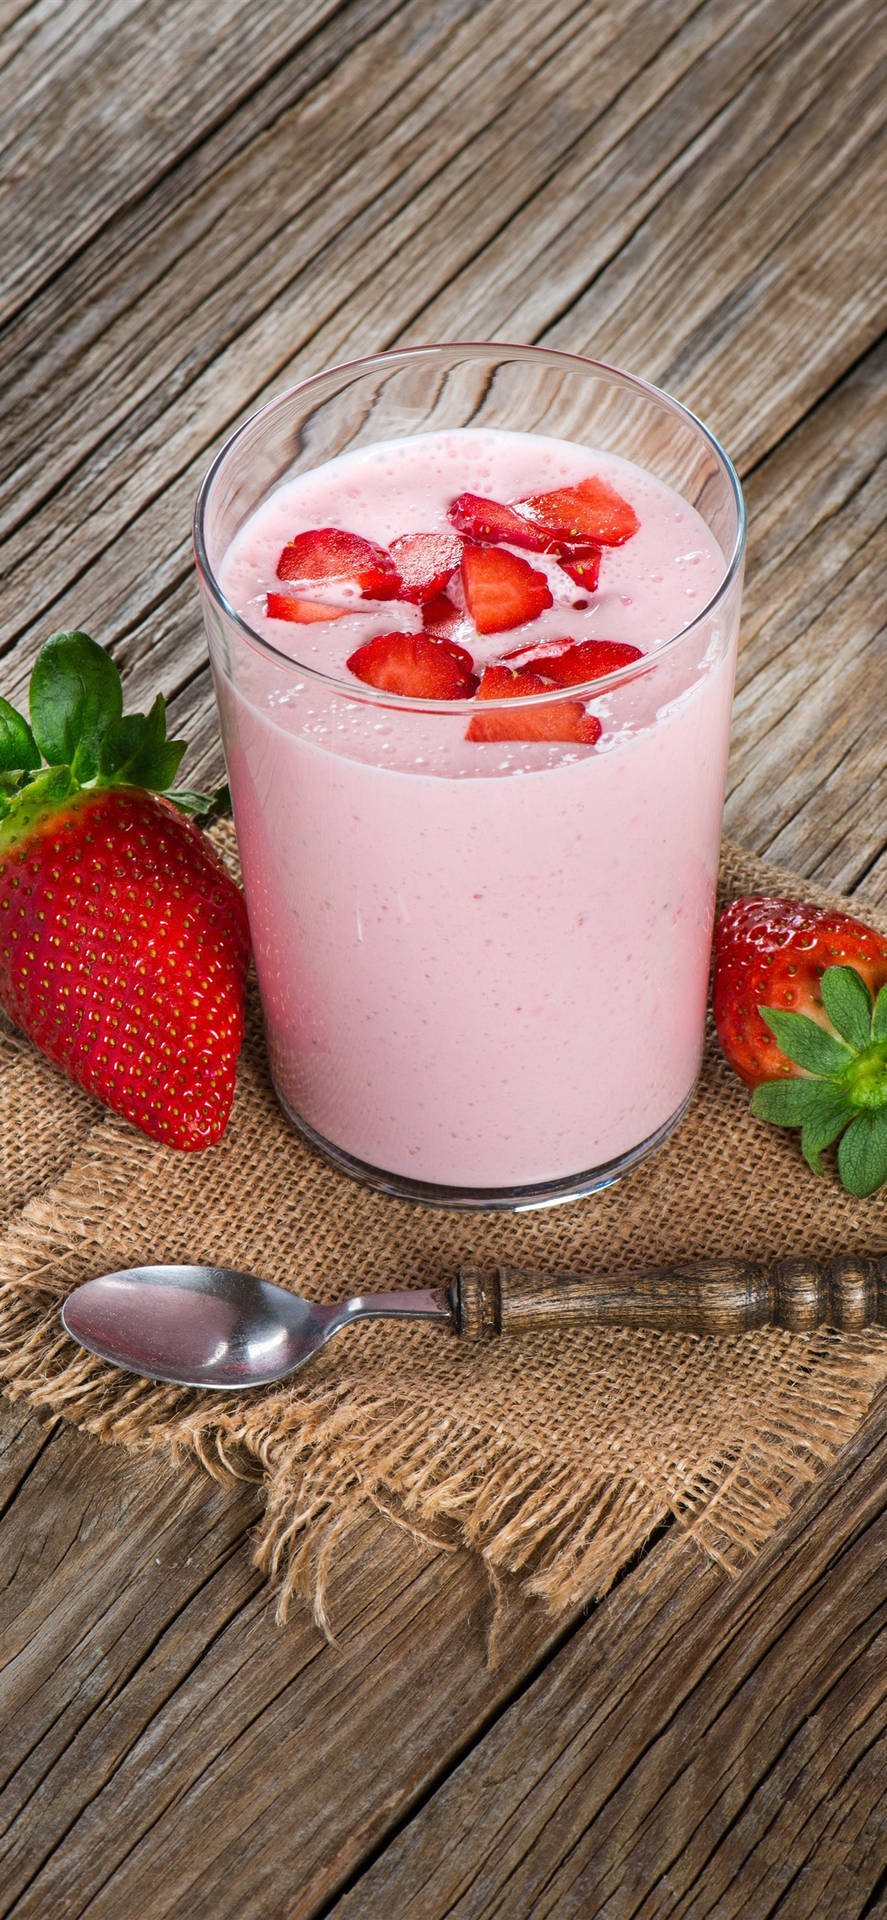 Enchanting Strawberry Milk Smoothie Wallpaper